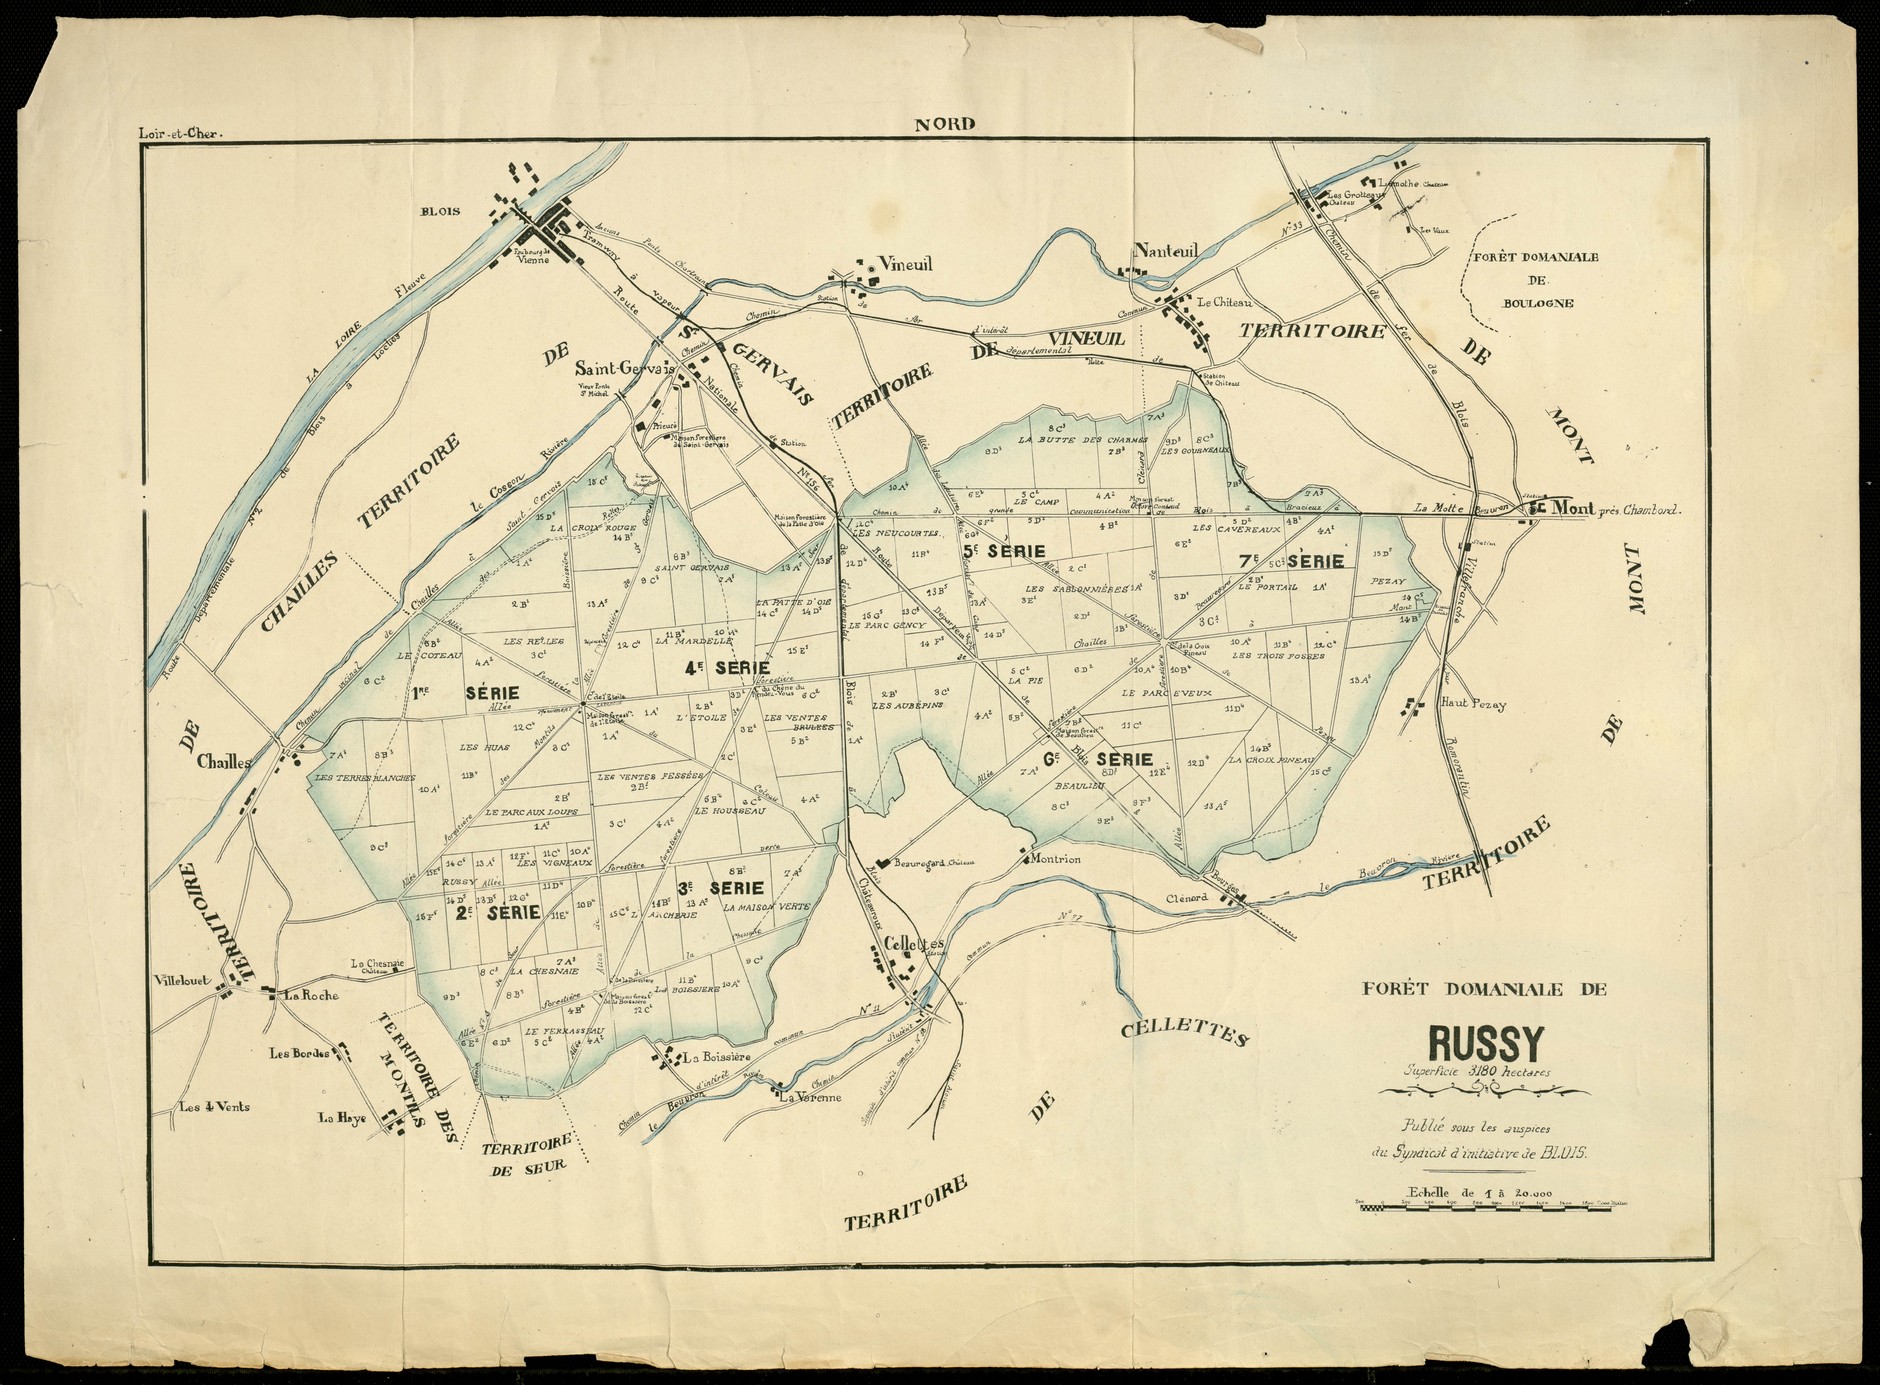 Plan de la forêt de Russy, Syndicat d'initiative de Blois, ca 1920